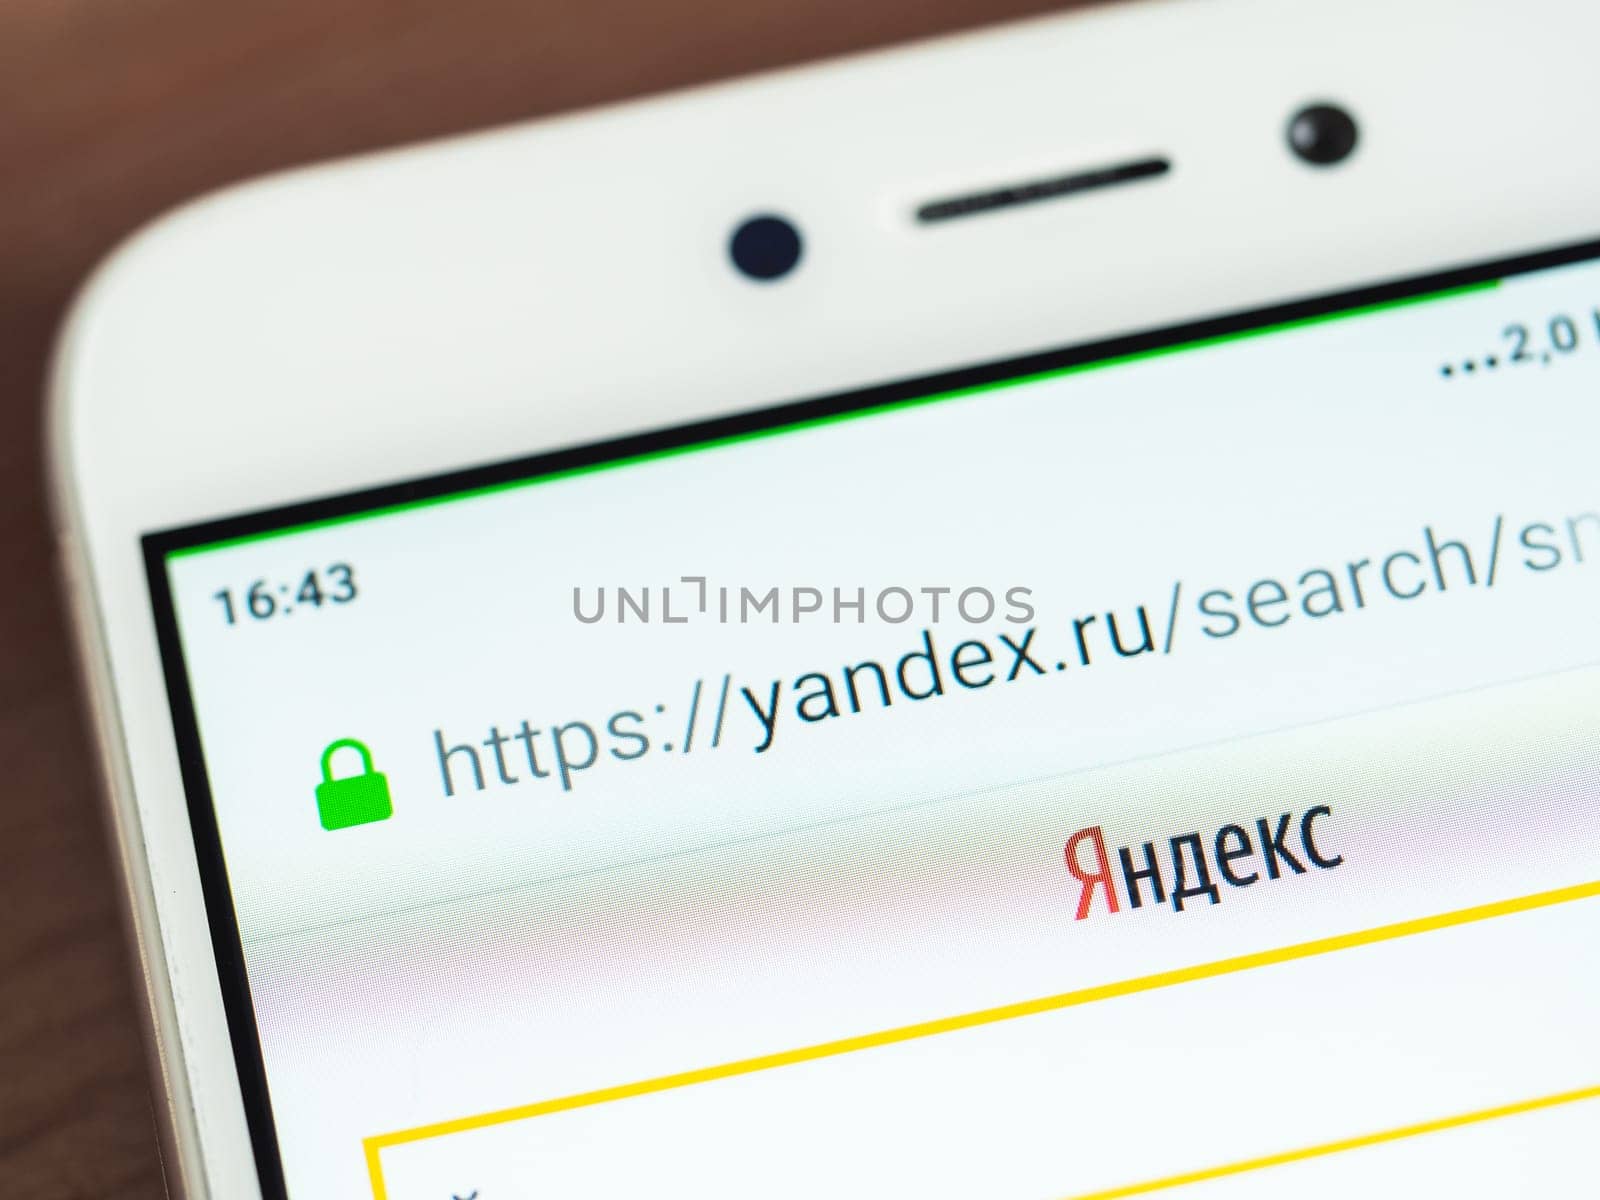 Yandex logo on smartphone screen by fascinadora